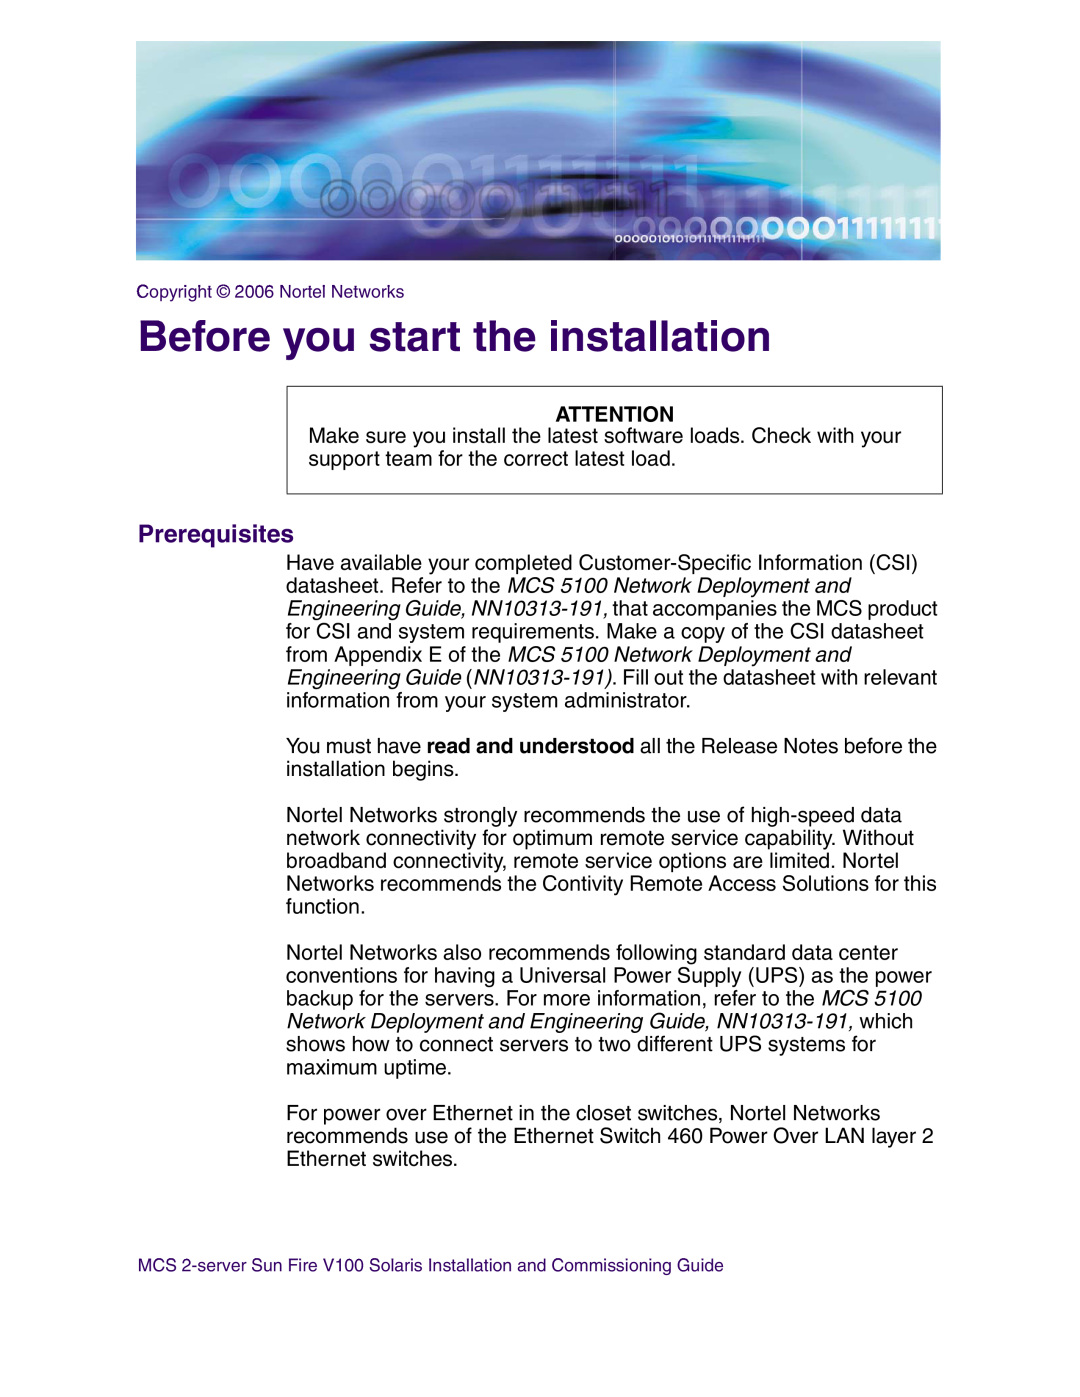 Nortel Networks V100 manual Before you start the installation, Prerequisites 